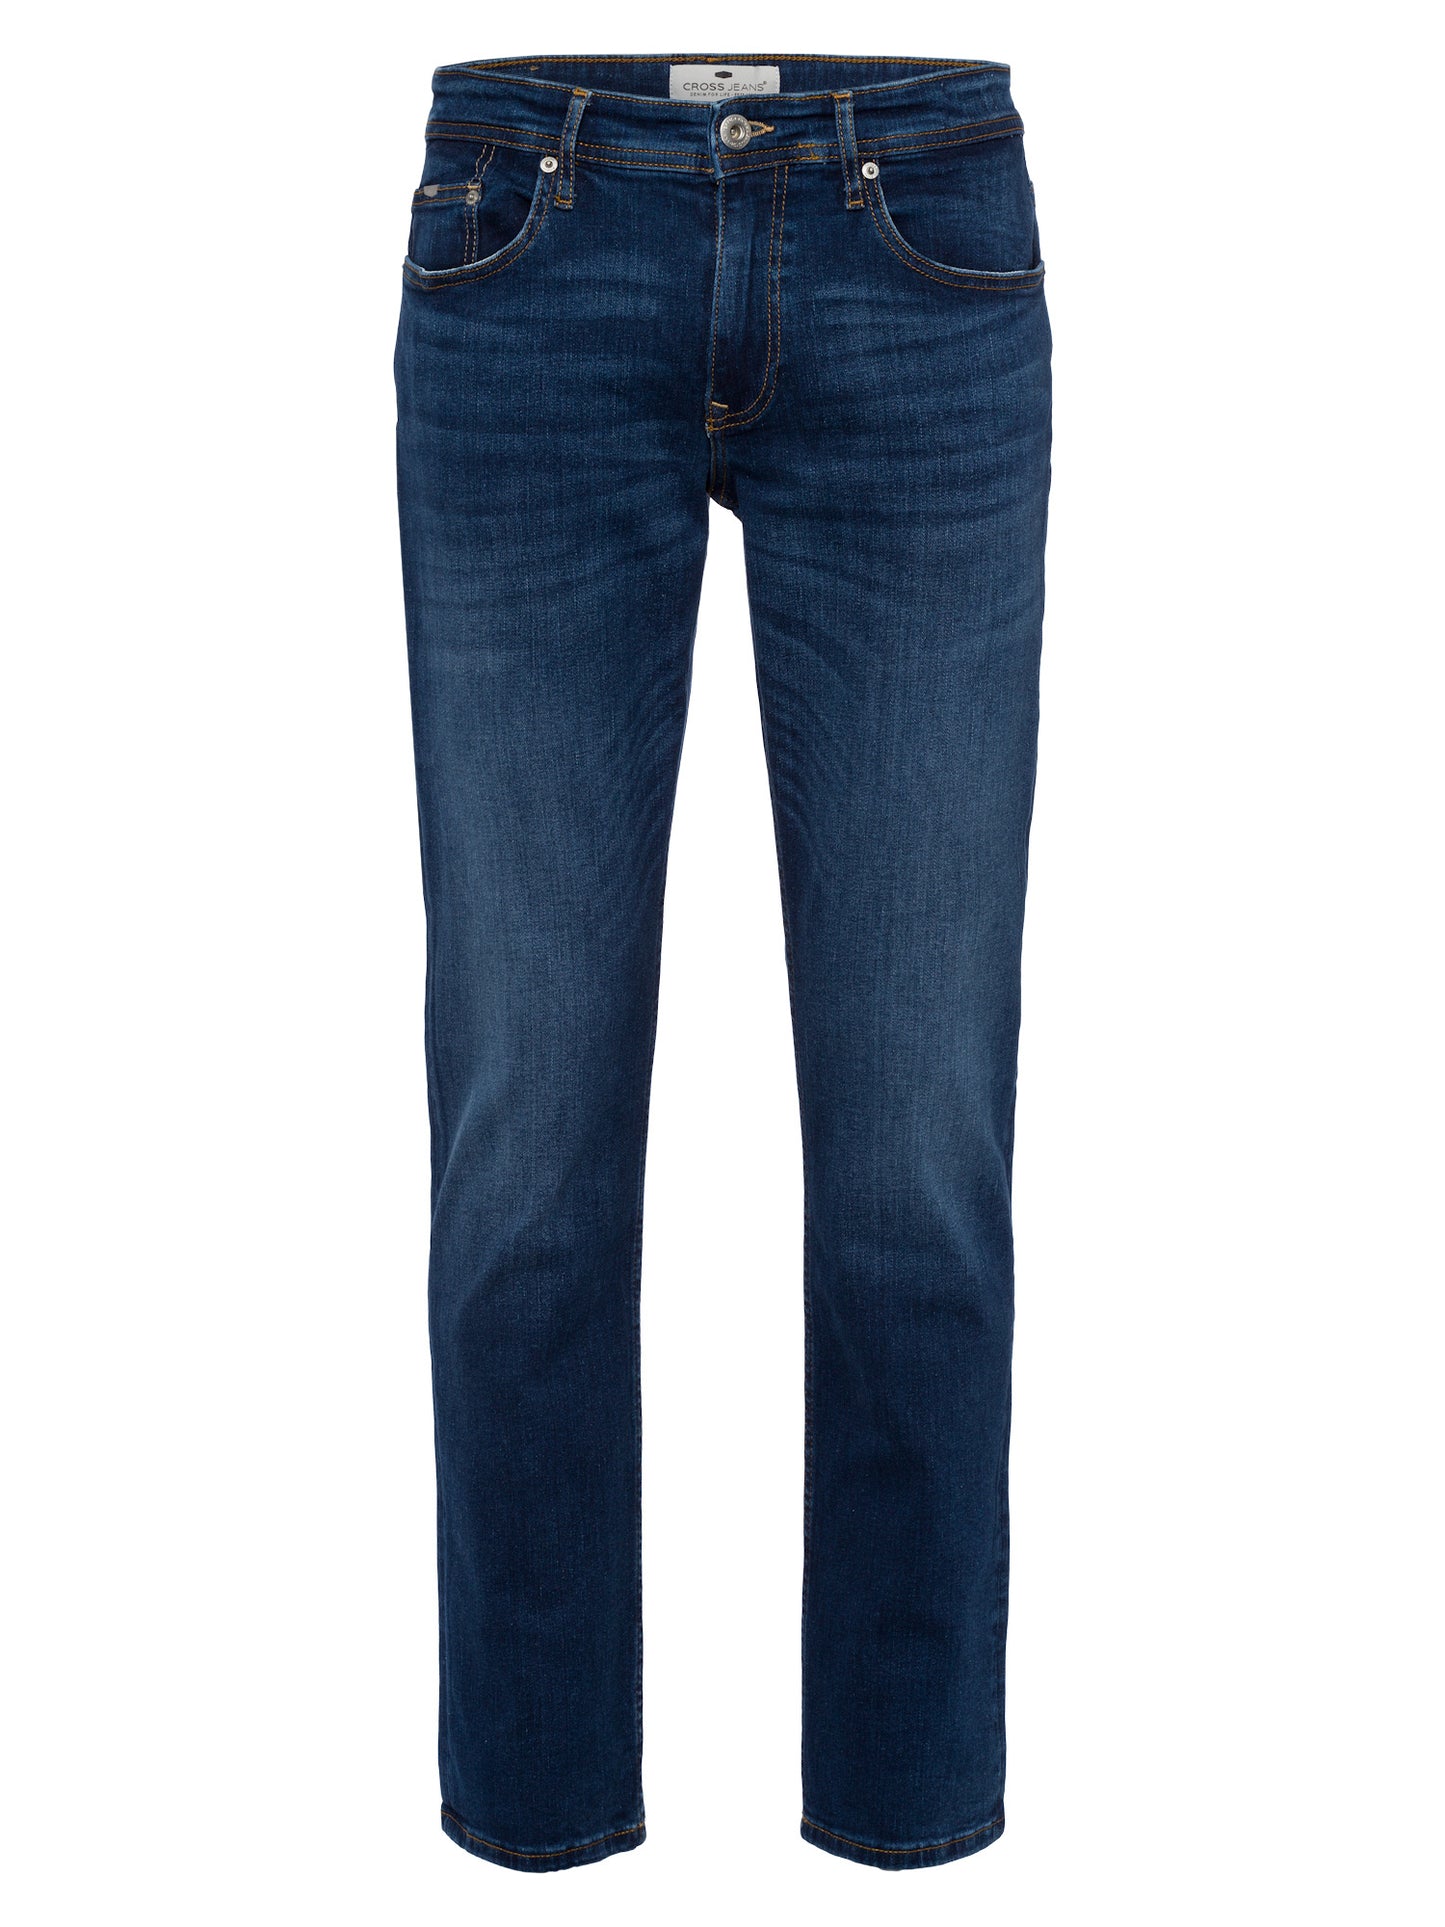 Dylan men's jeans regular fit regular waist straight leg blue